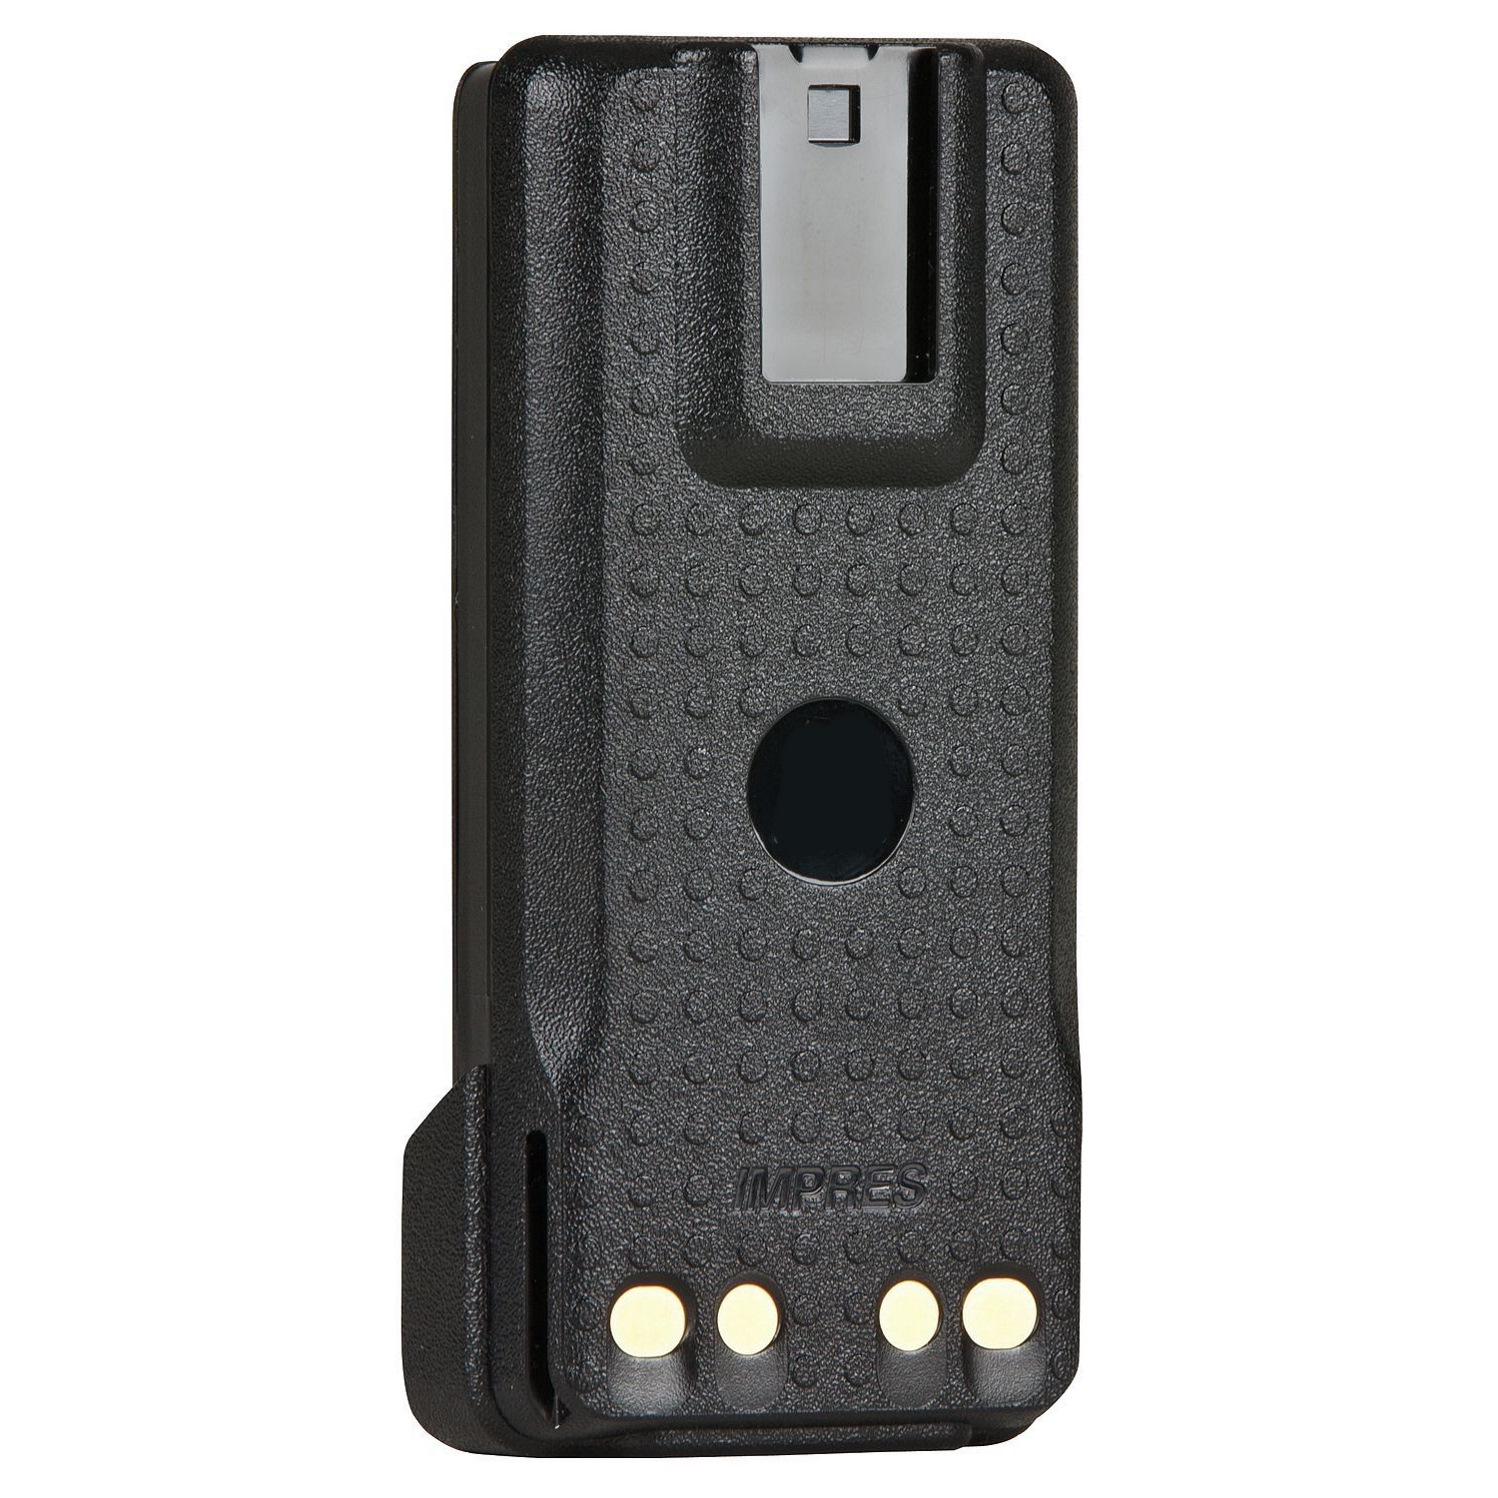 Аккумулятор PMNN4415 для р/ст Motorola, фото